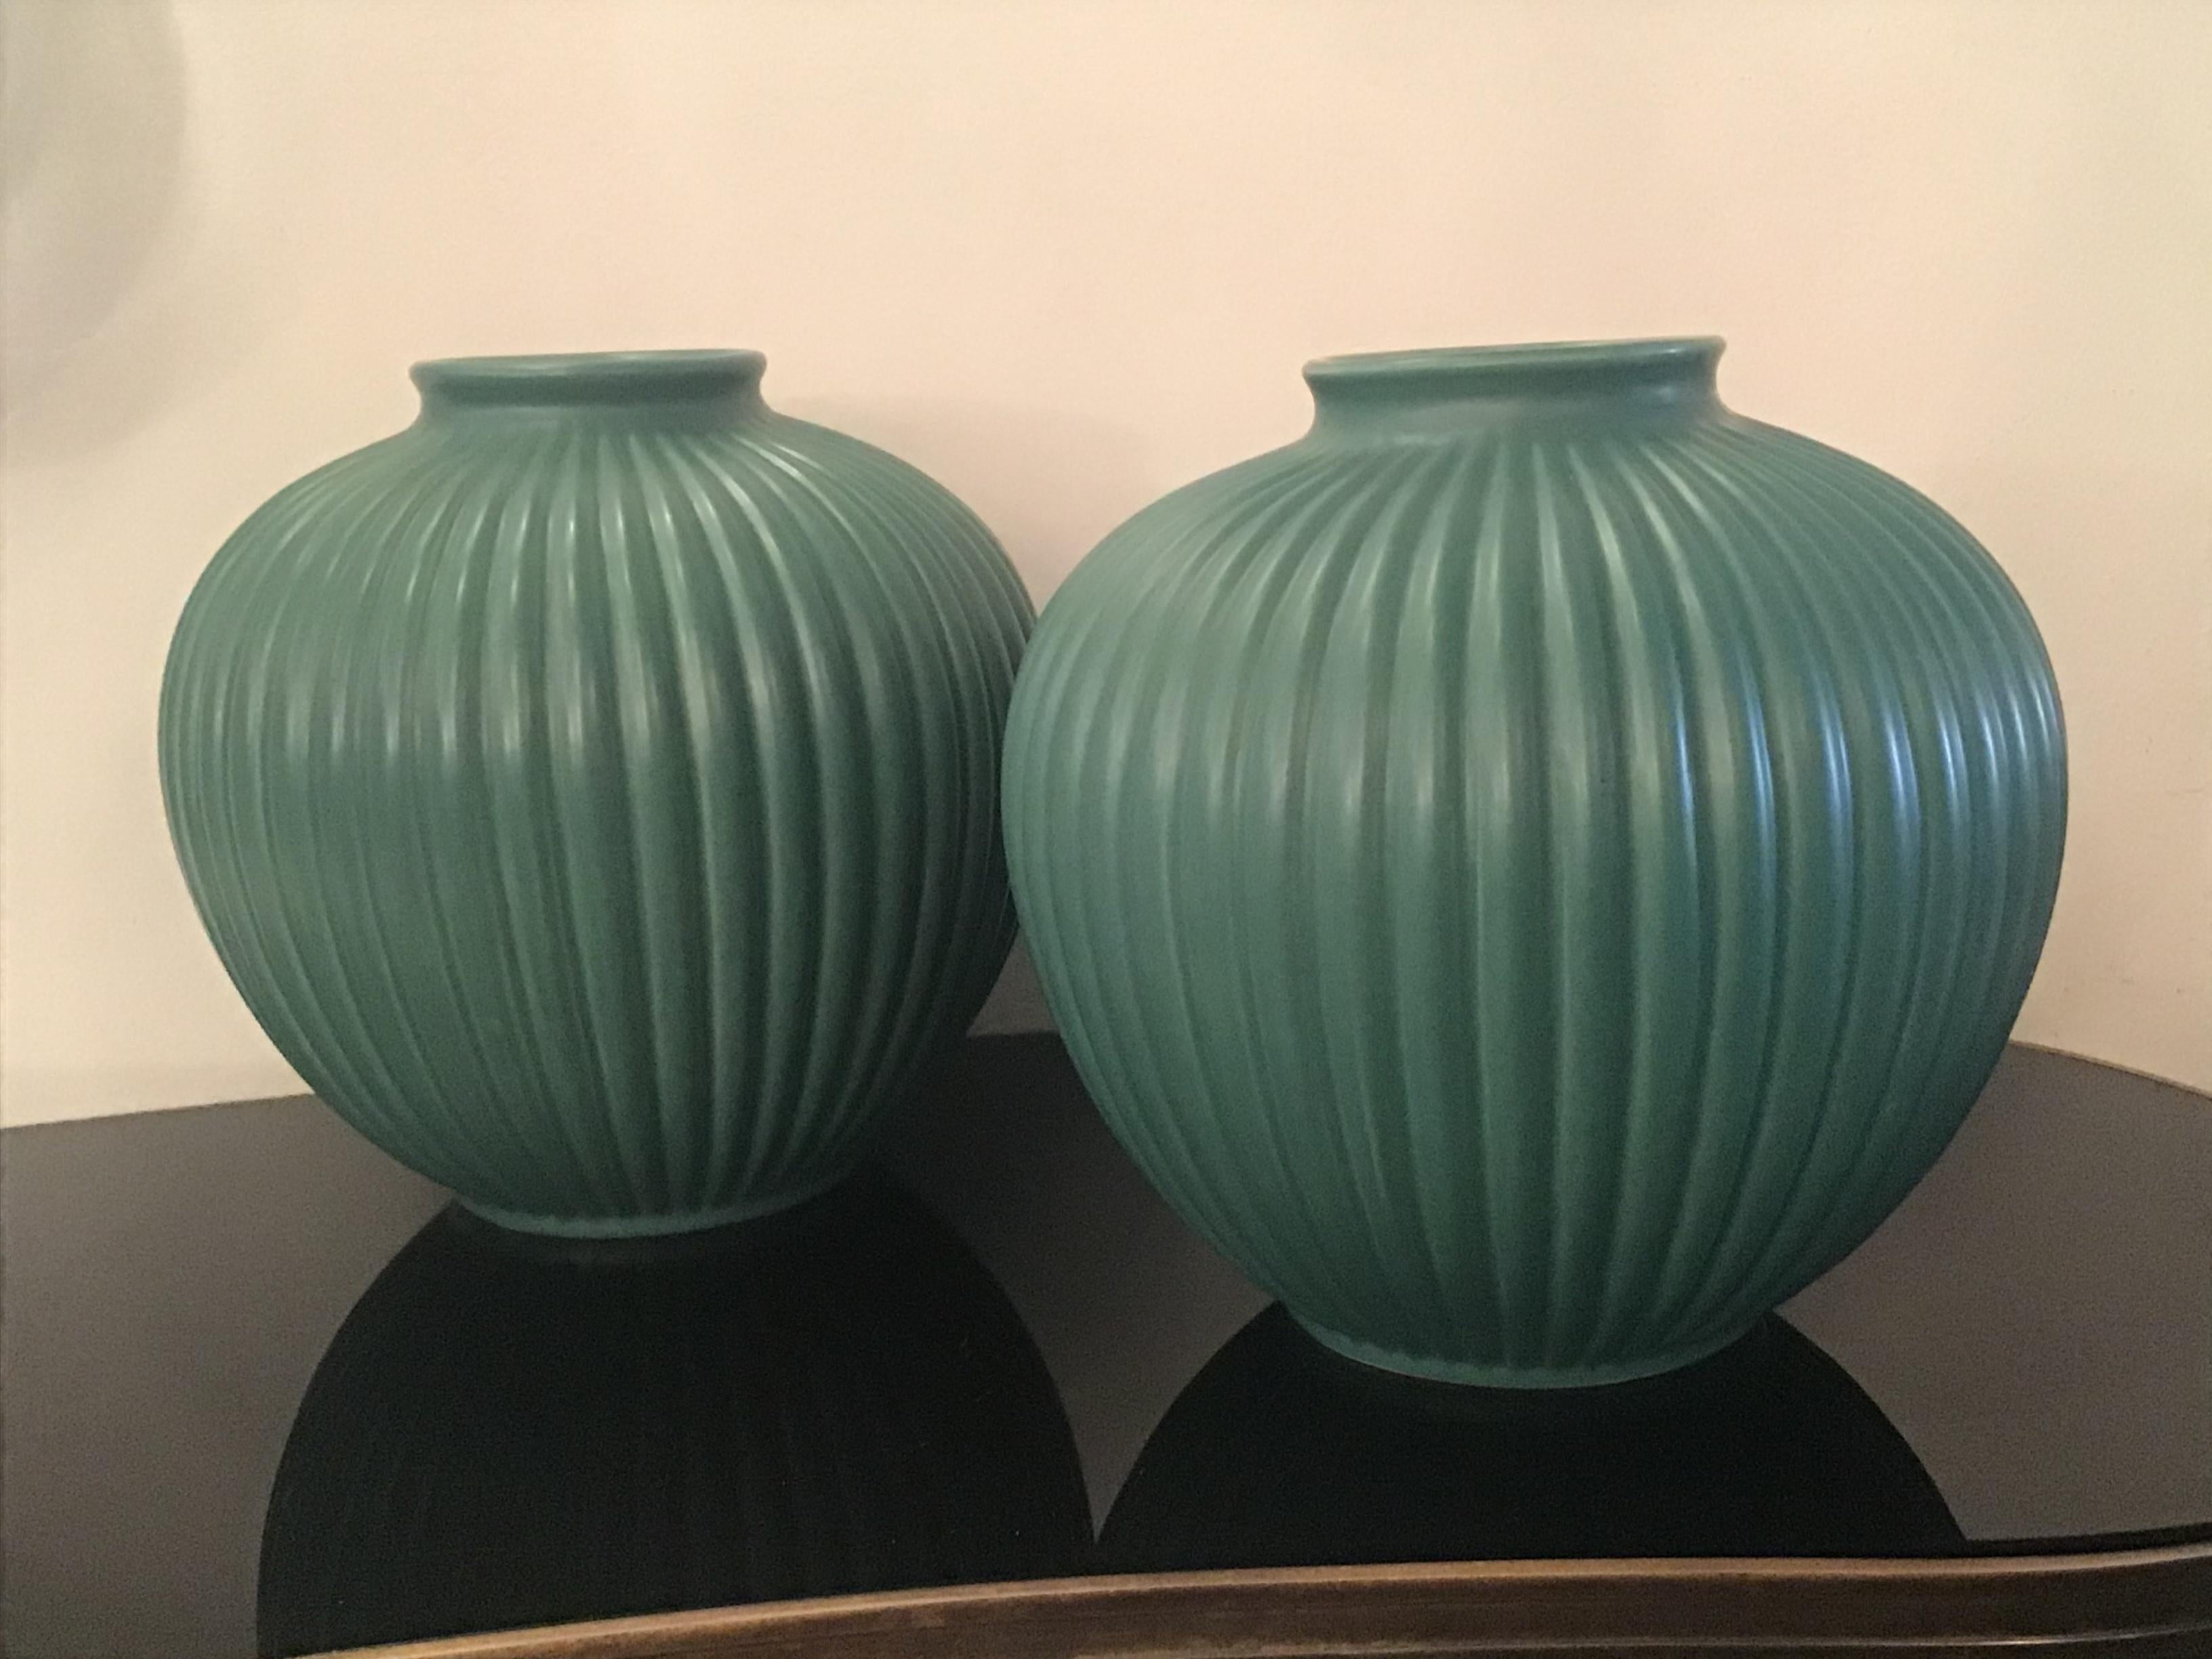 Richard Ginori Giovanni Gariboldi Pair of Vases Green Ceramic 1950 Italy For Sale 6